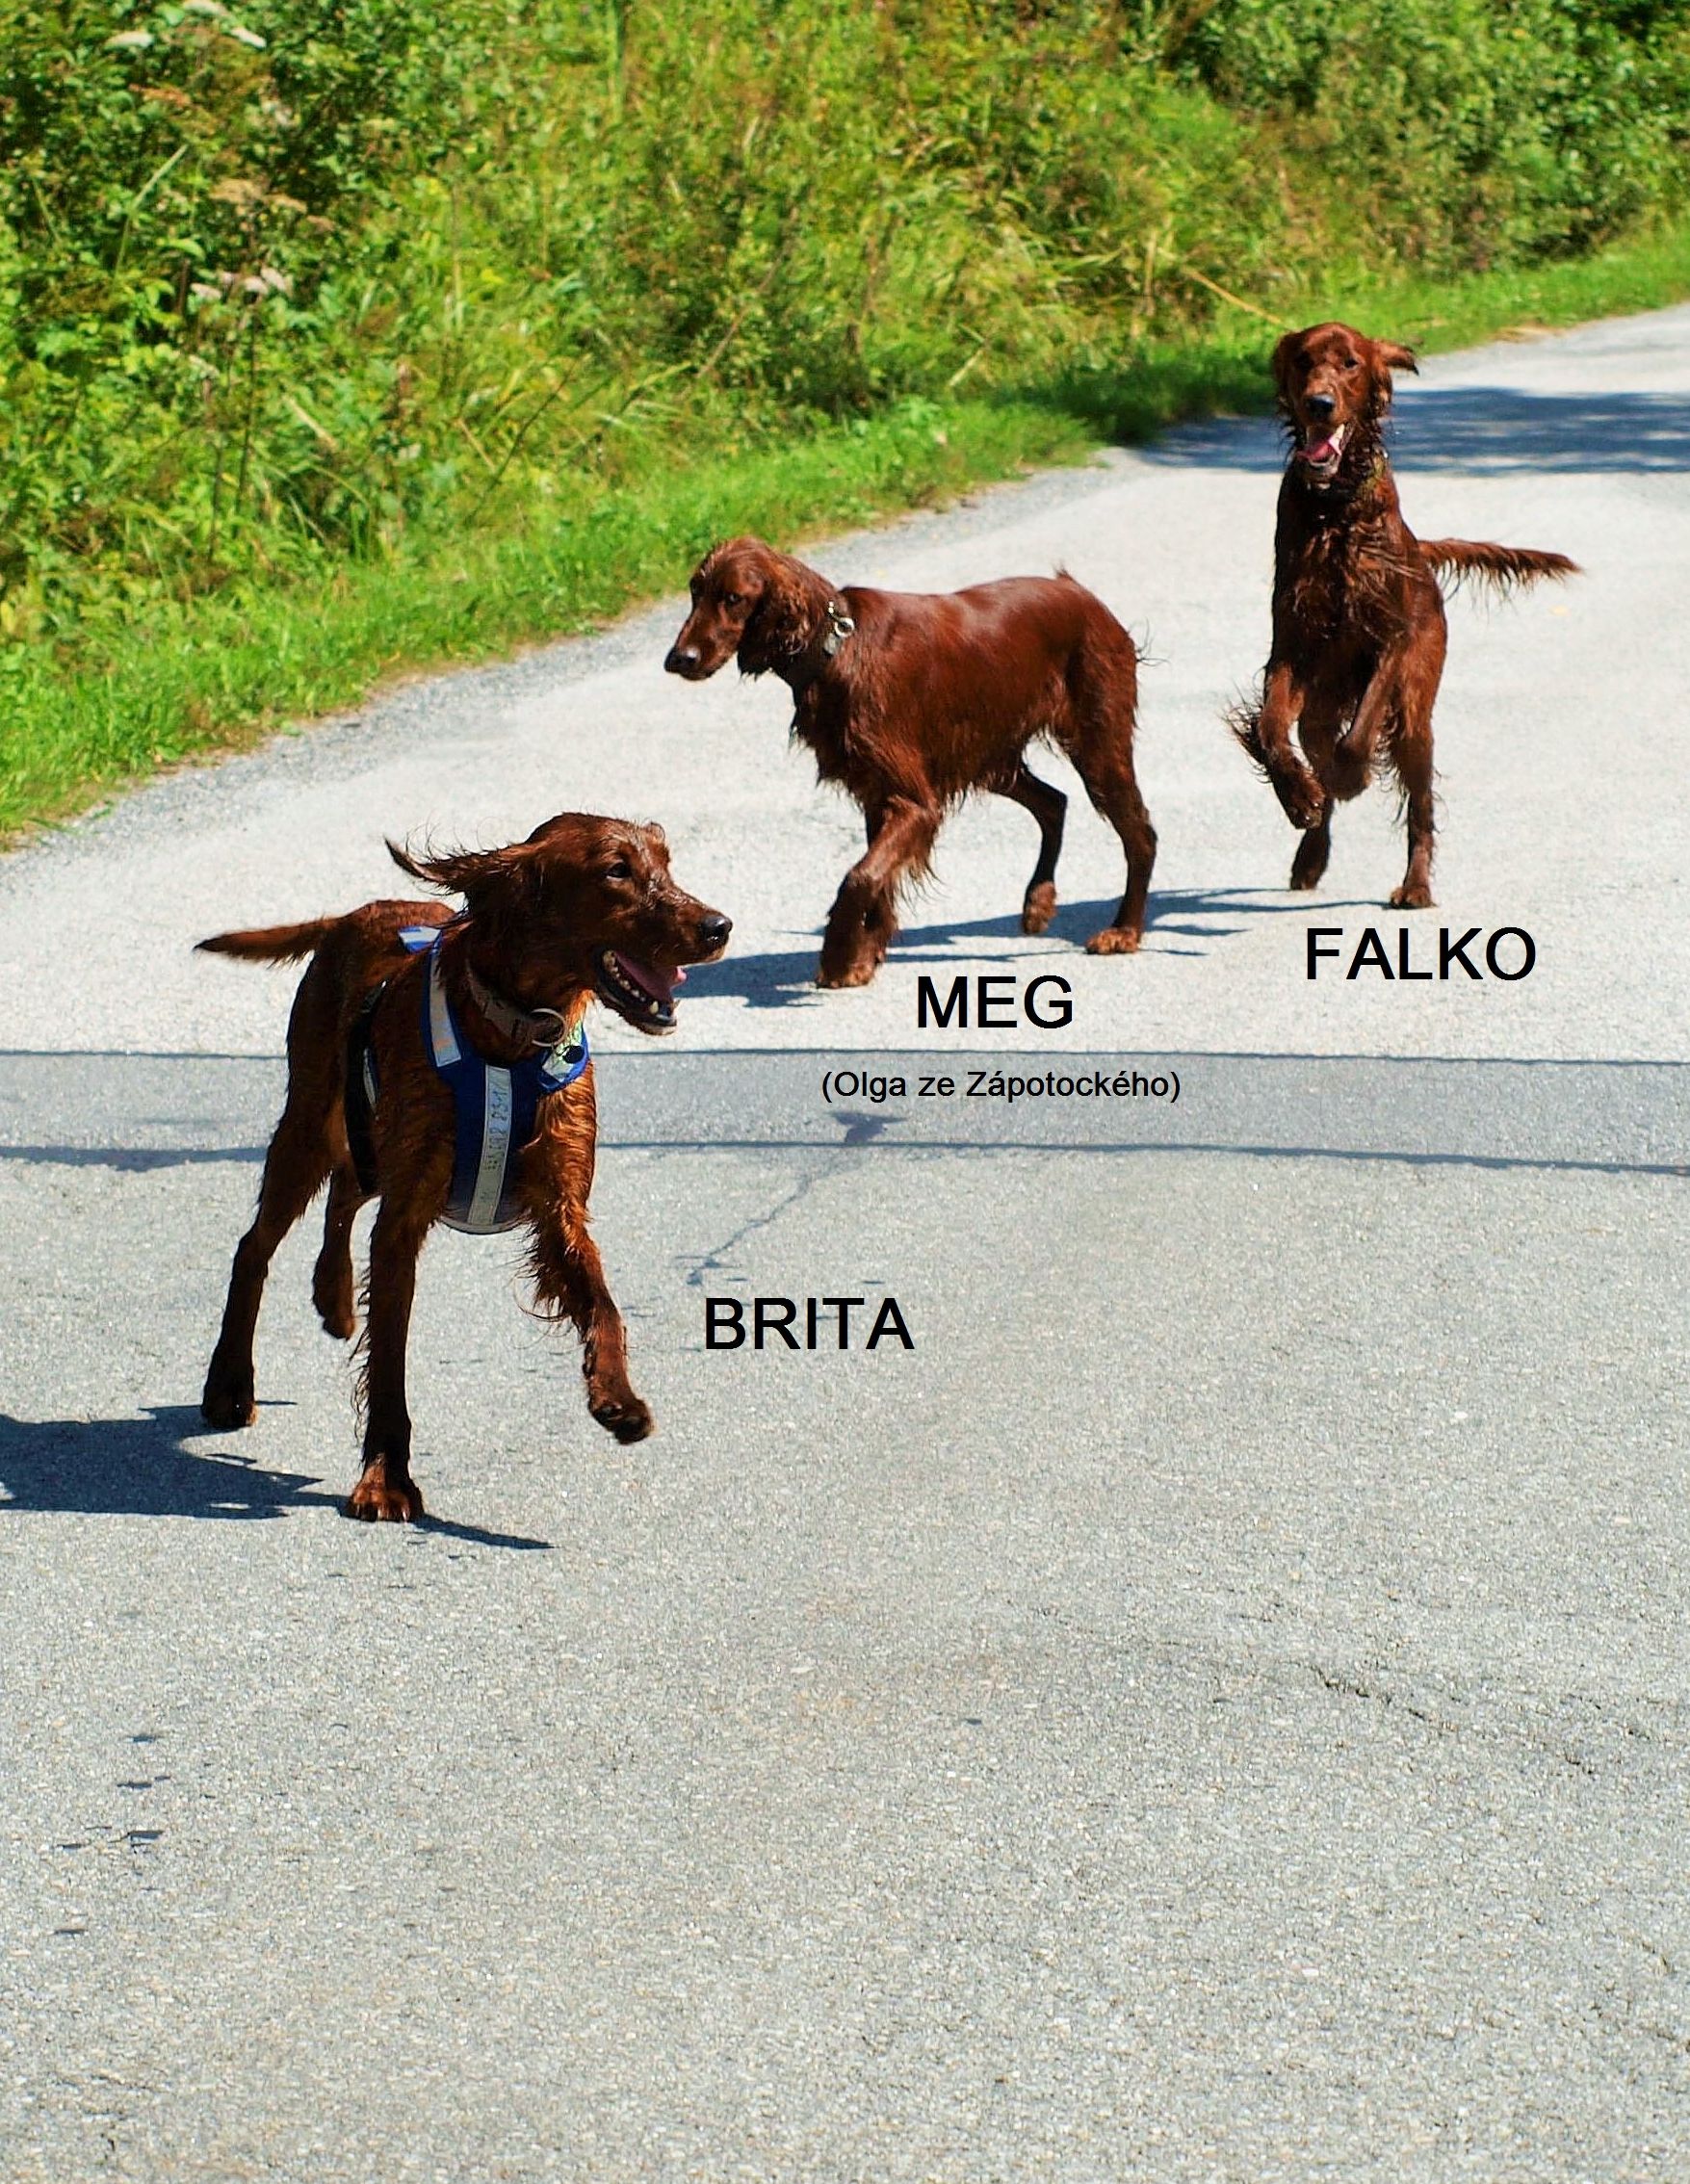 Brita, Meg, Falkox